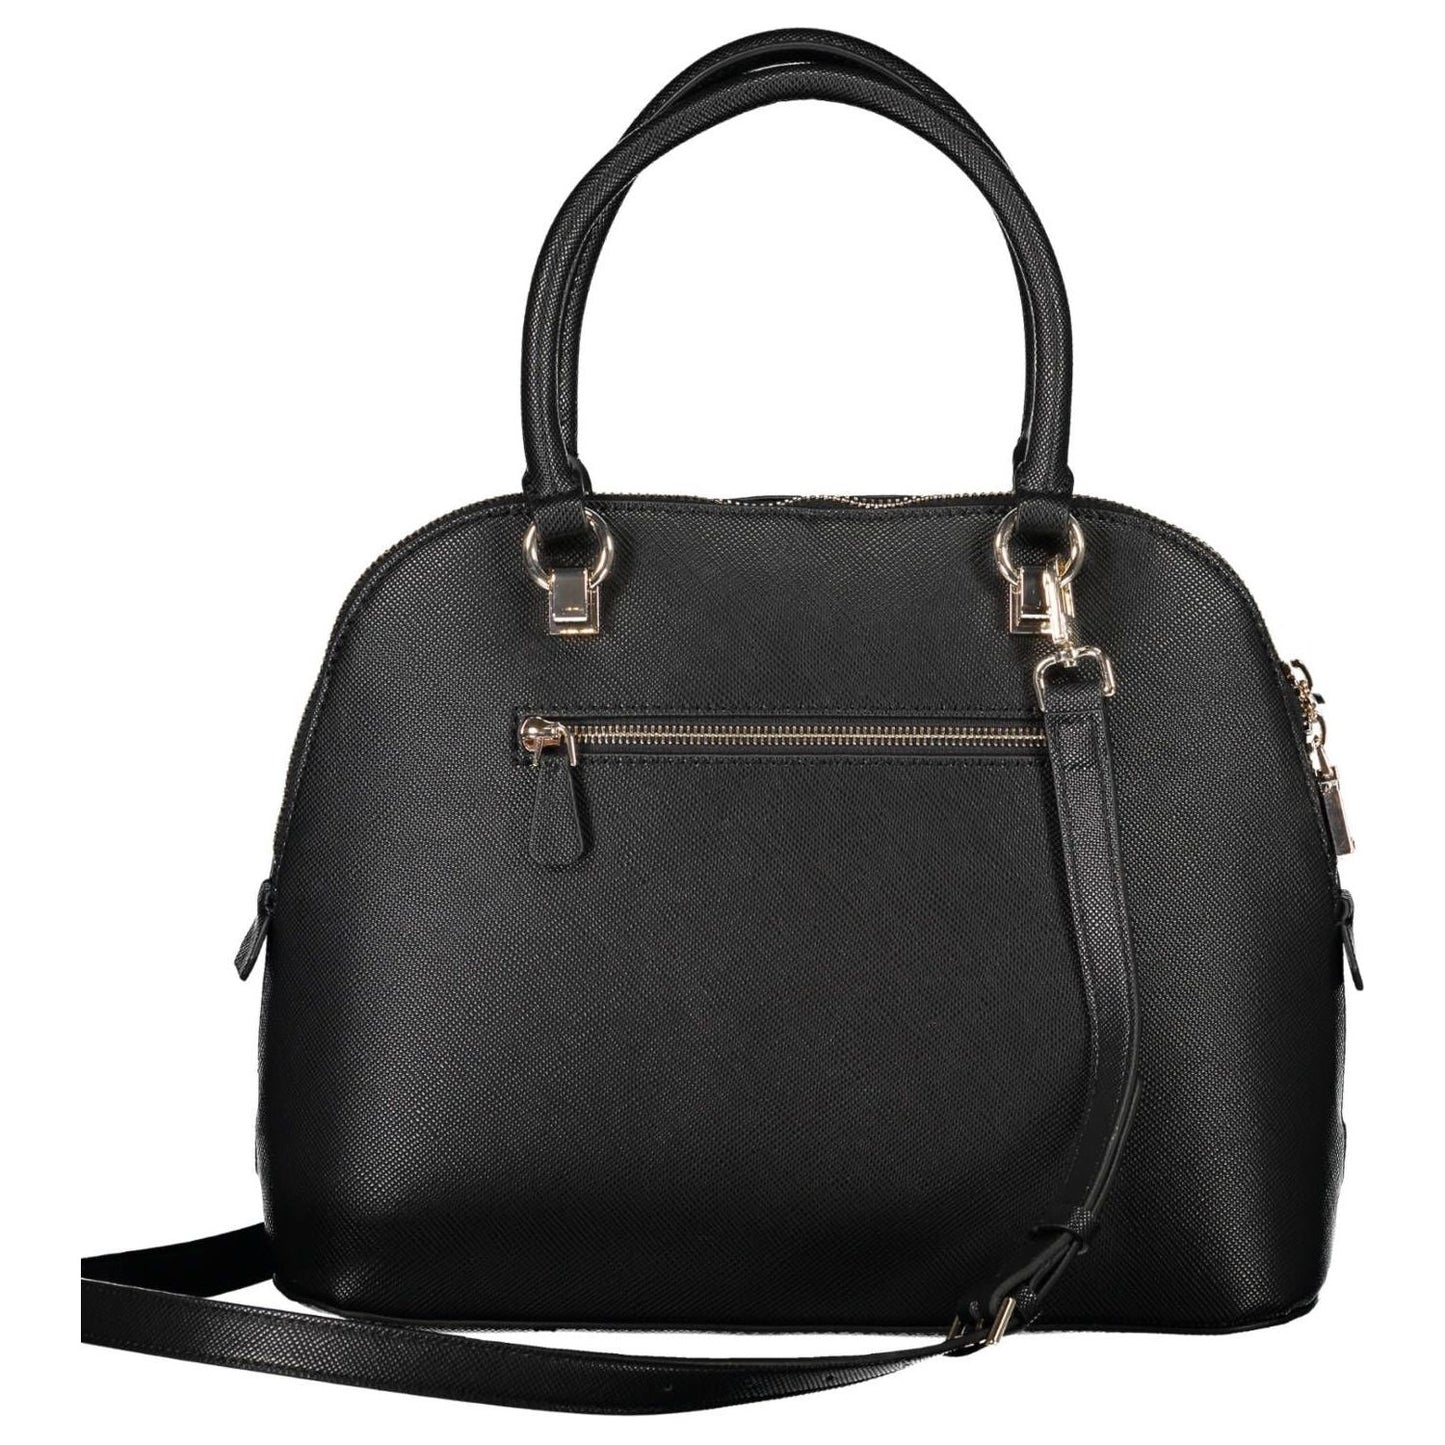 Guess Jeans | Chic Black Guess Handbag with Contrasting Details| McRichard Designer Brands   